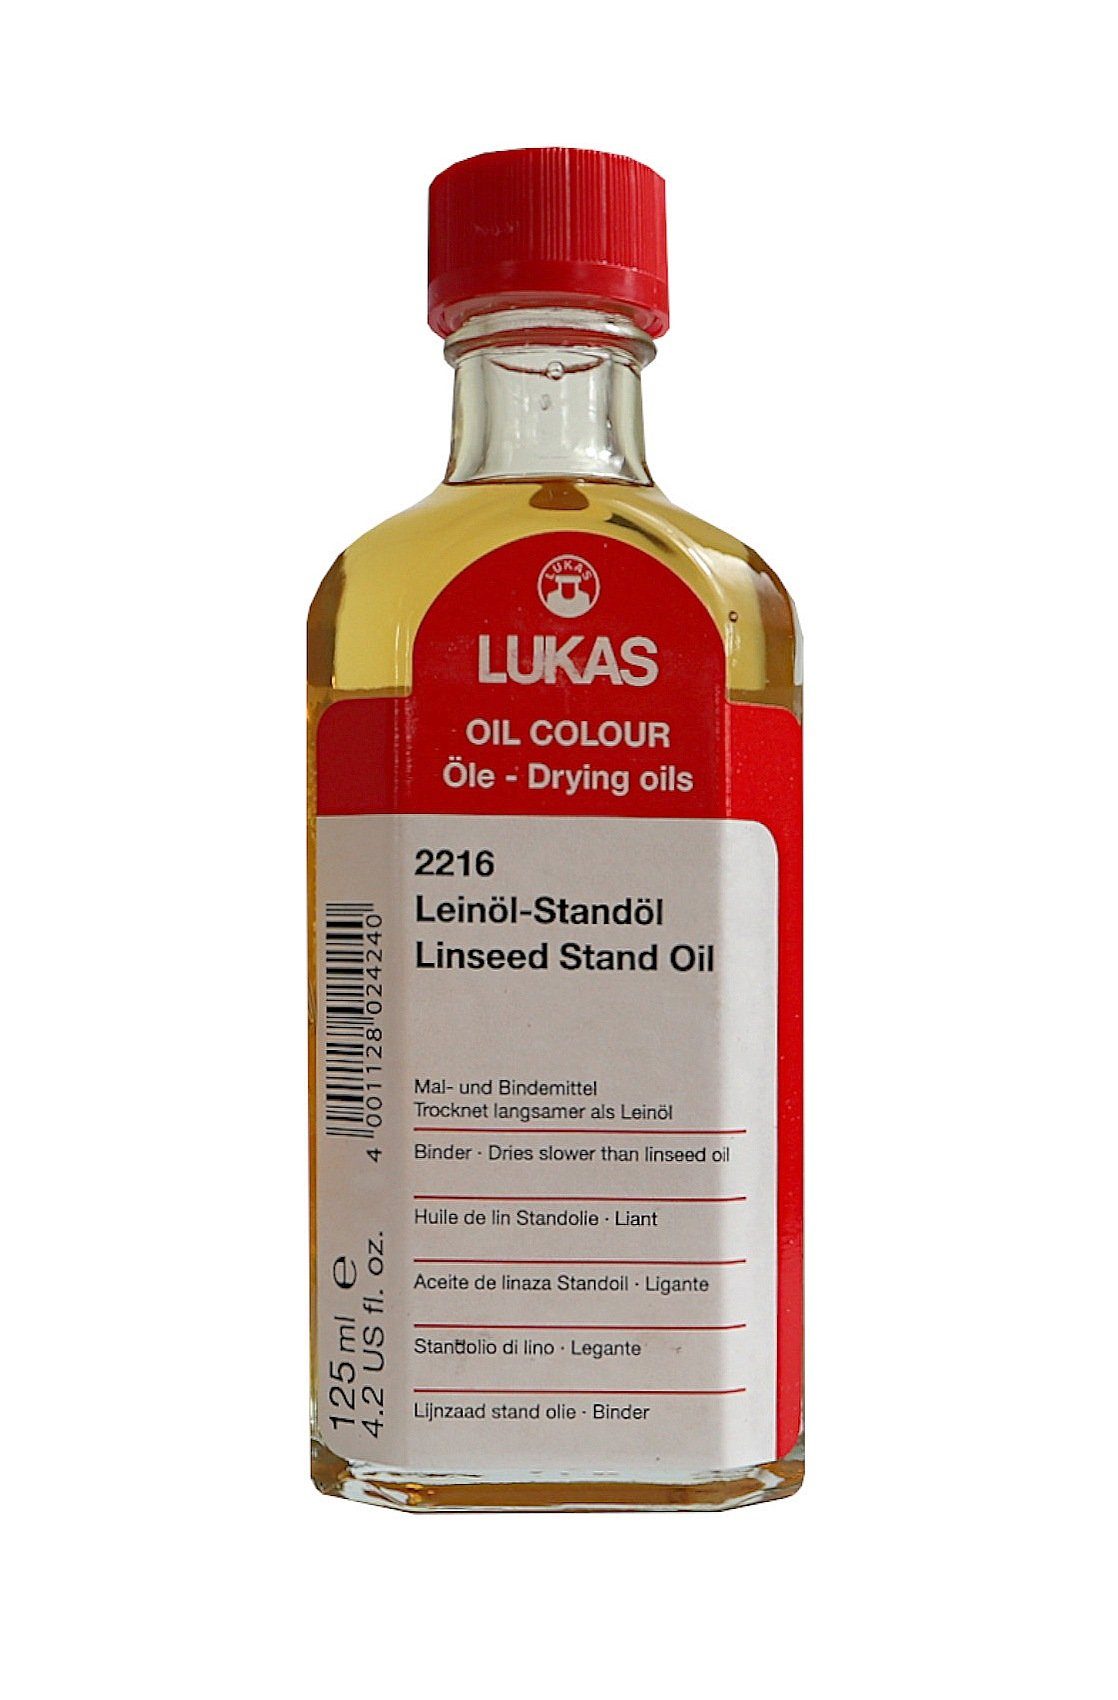 Lukas-Nerchau GmbH Leinölfirnis LUKAS Leinöl-Standöl 2216 - 125 ml